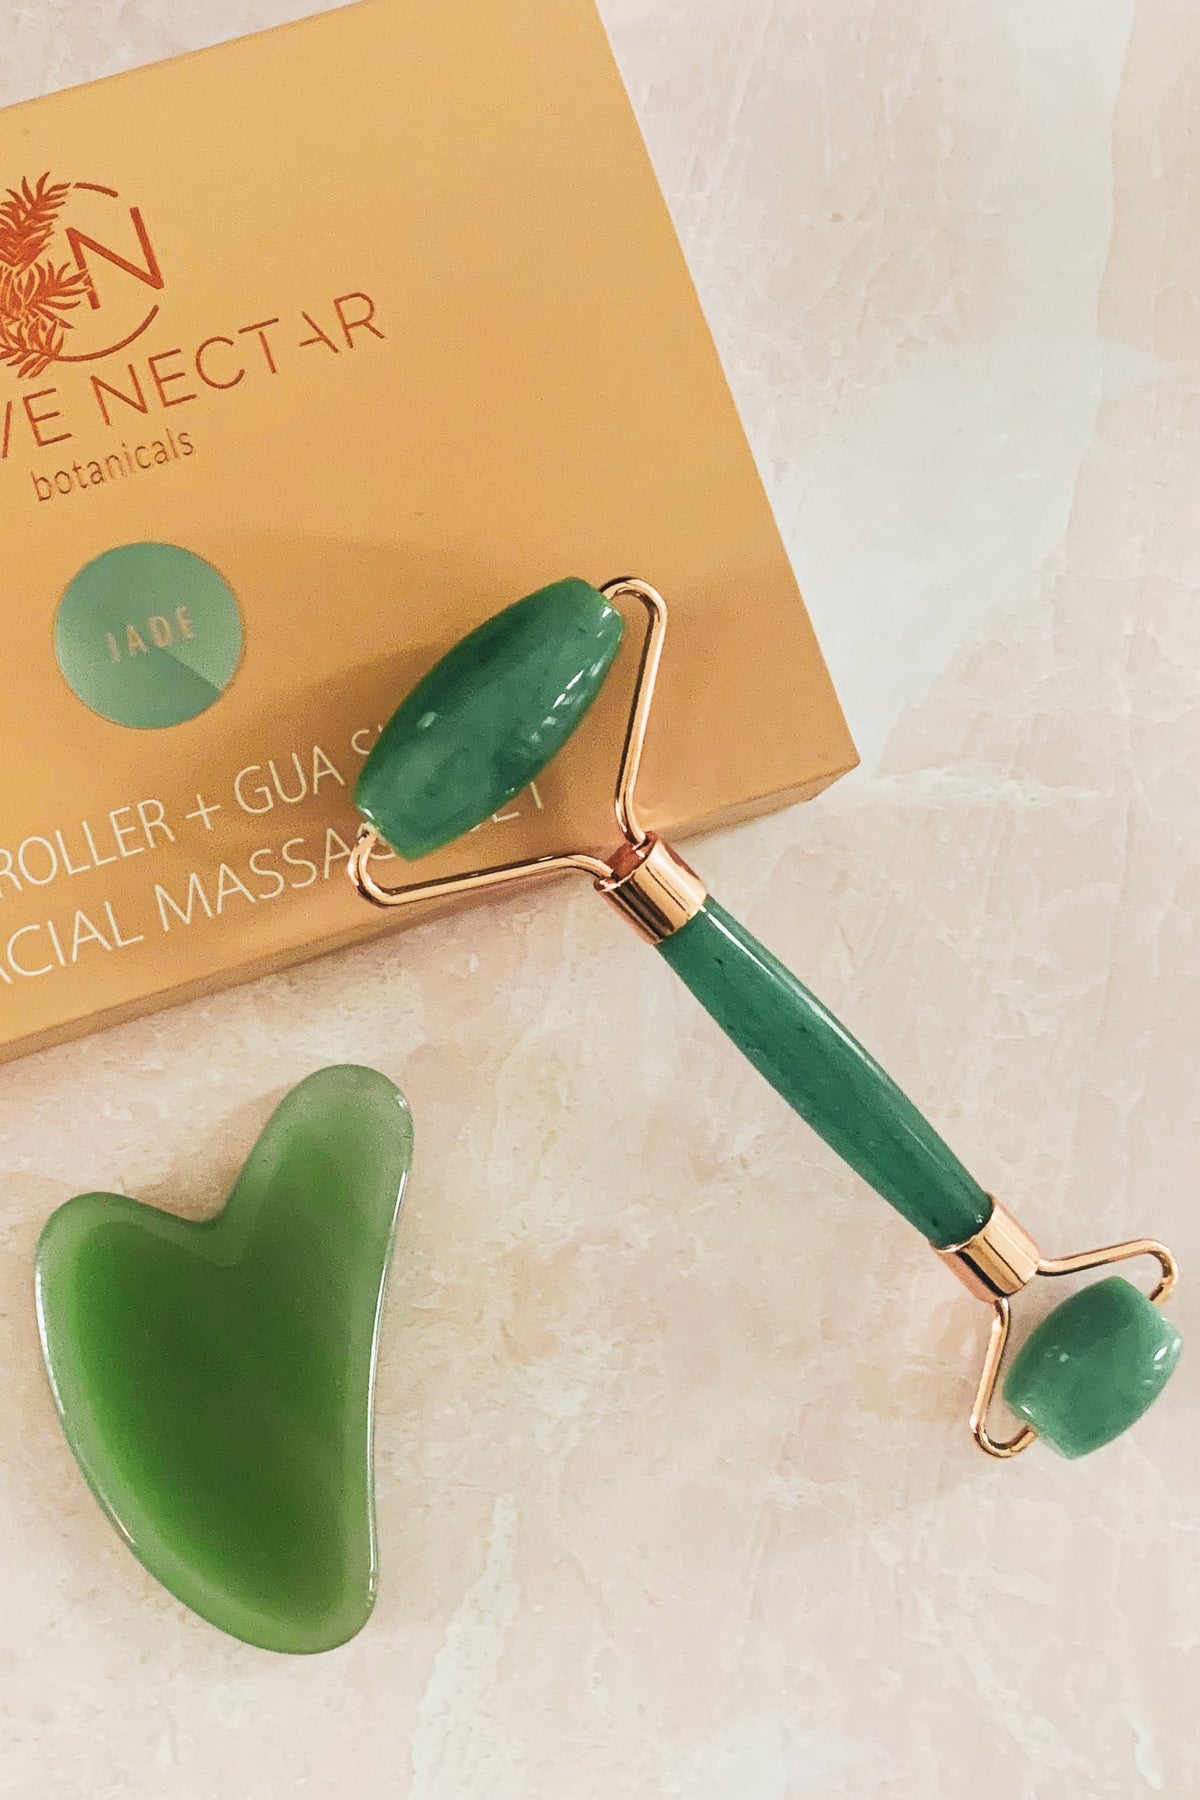 Gemstone Roller + Gua Sha Facial Massage Set